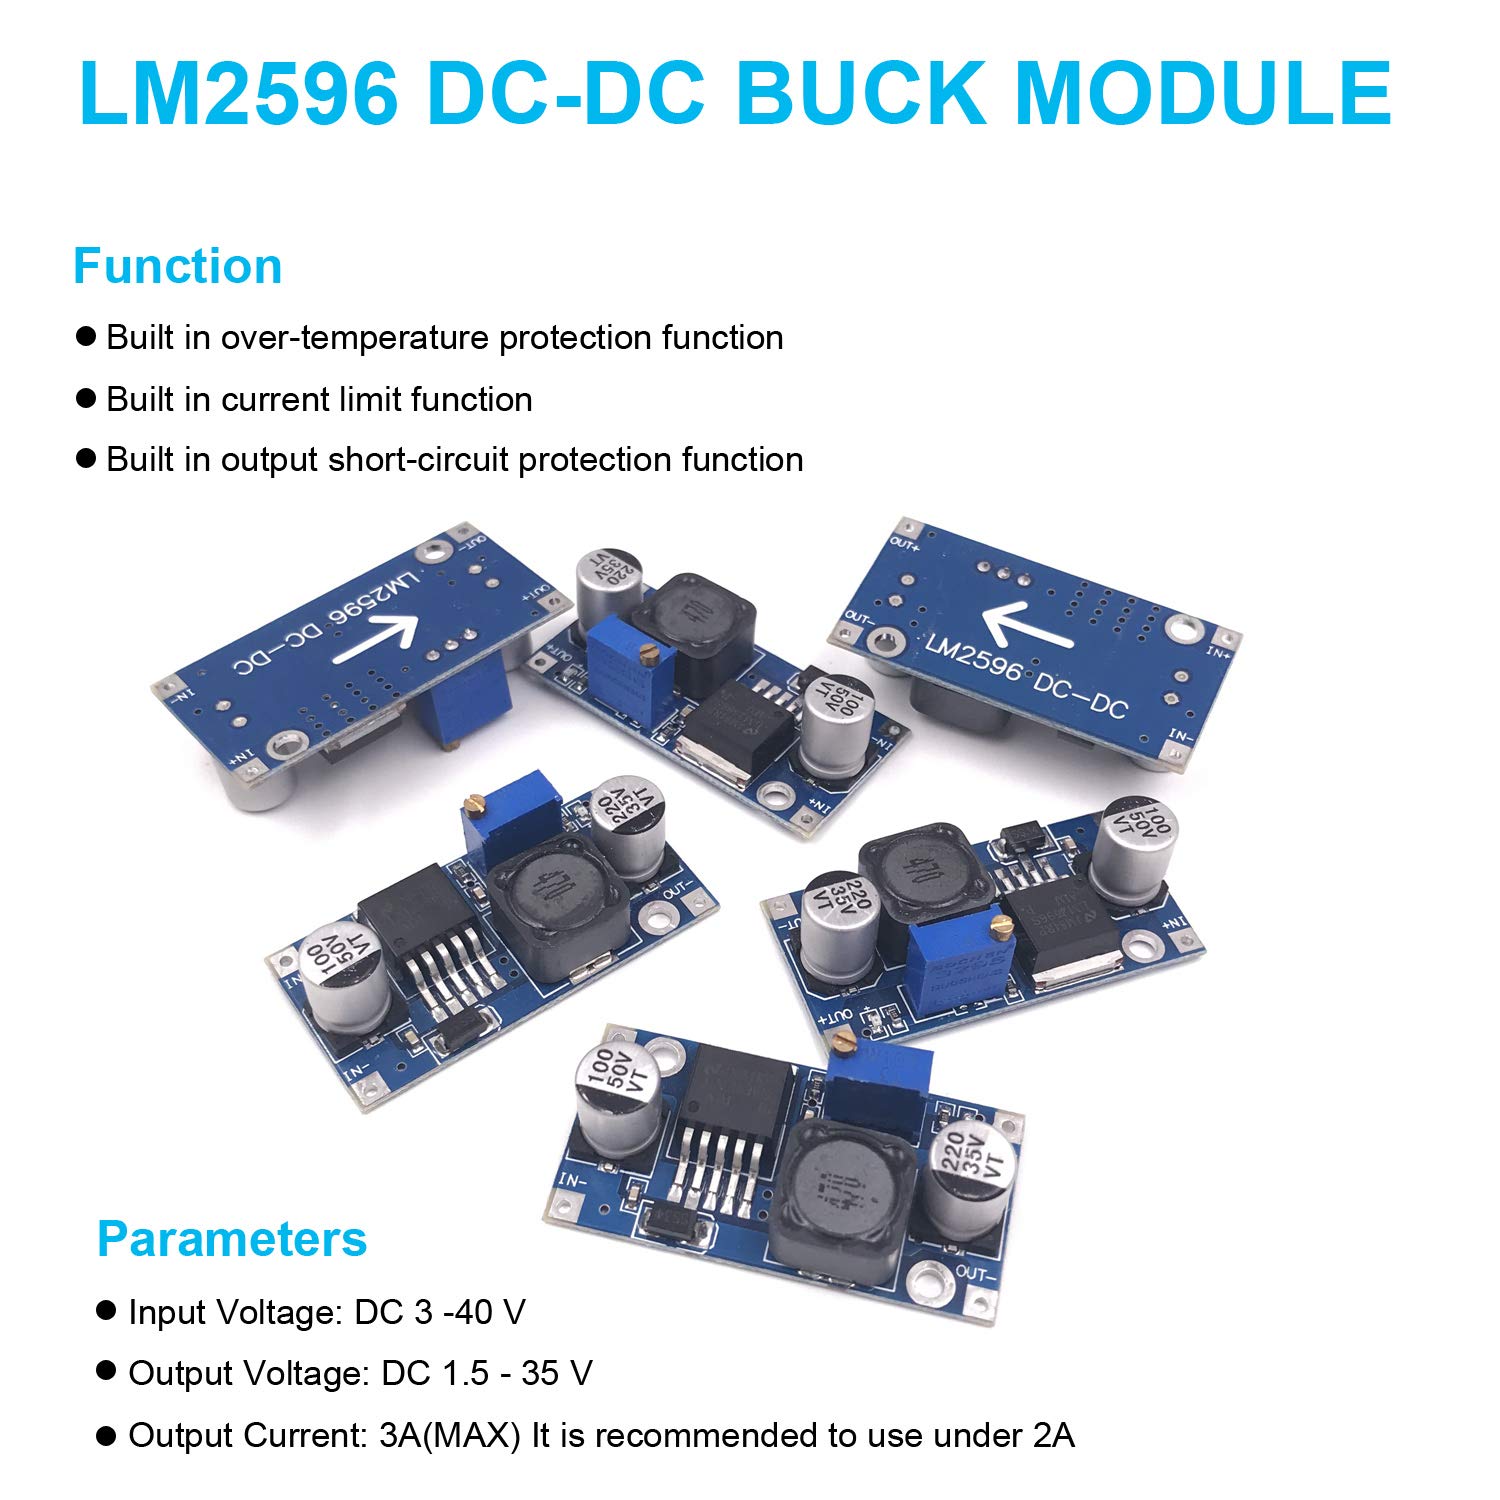 BULVACK 10 Pack LM2596 DC-DC Buck Converter Step Down Module Power Supply DIP Output 1.25V-30V 3A